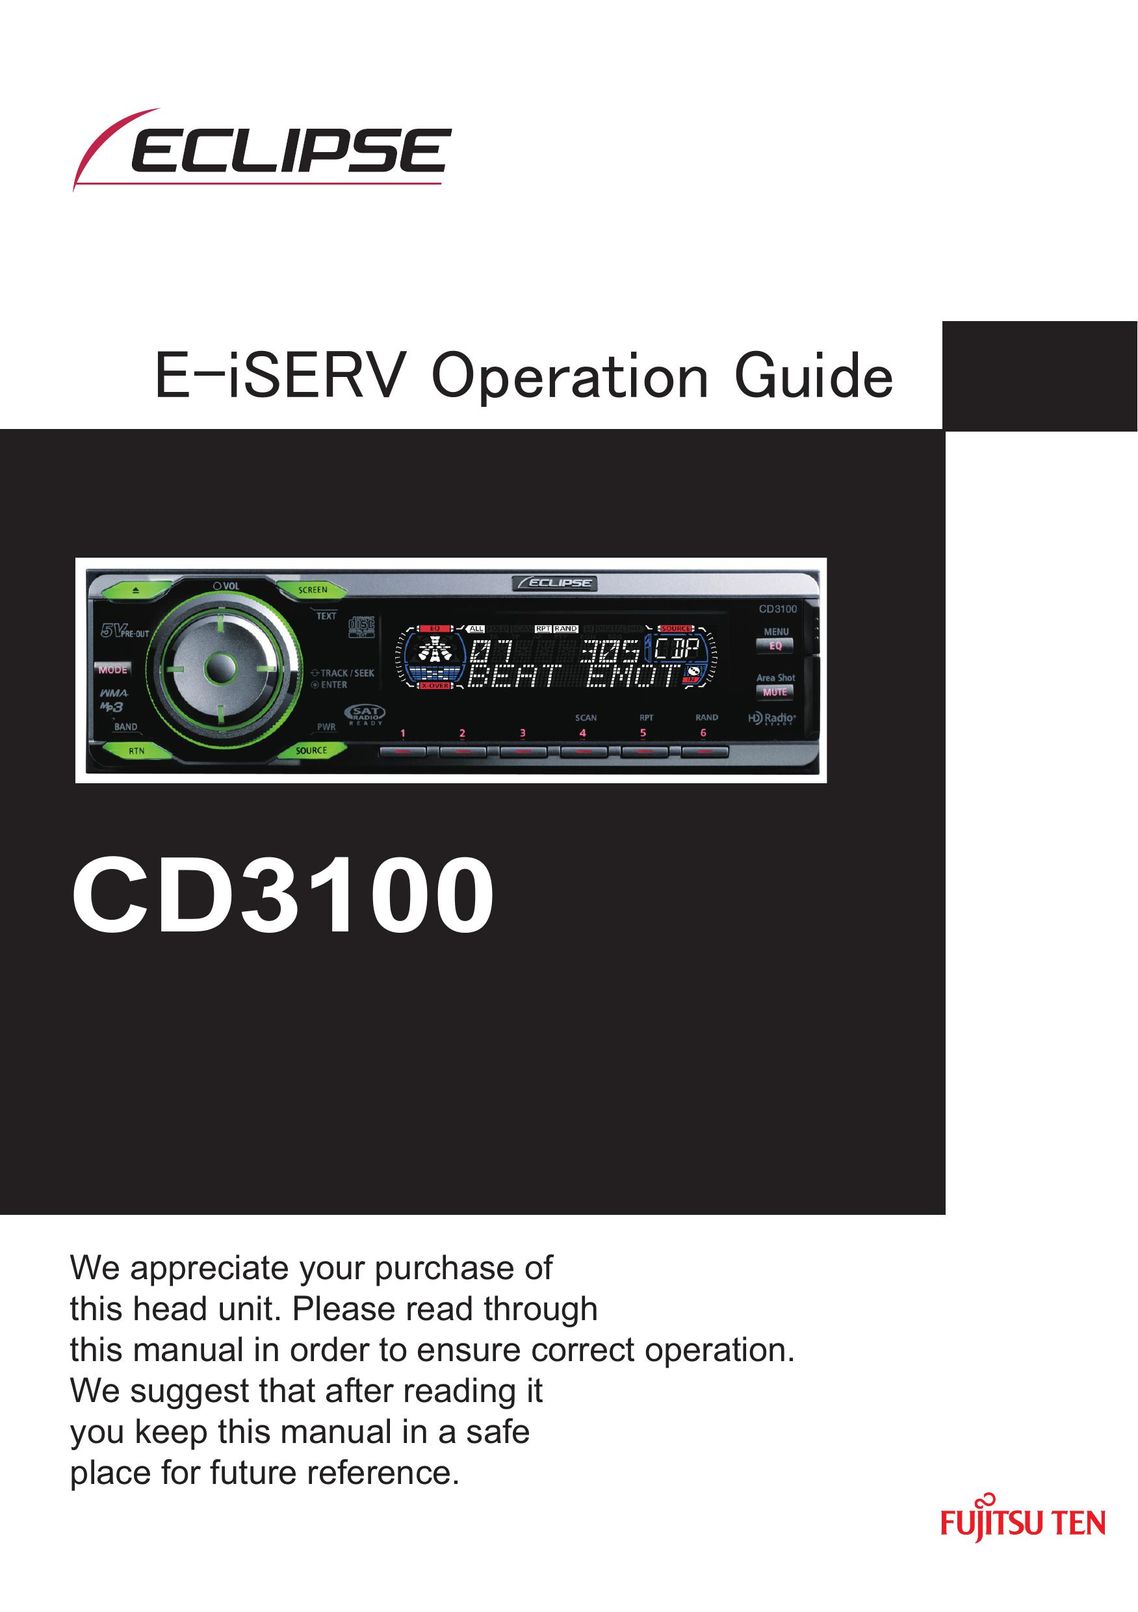 Eclipse - Fujitsu Ten CD3100 Car Stereo System User Manual